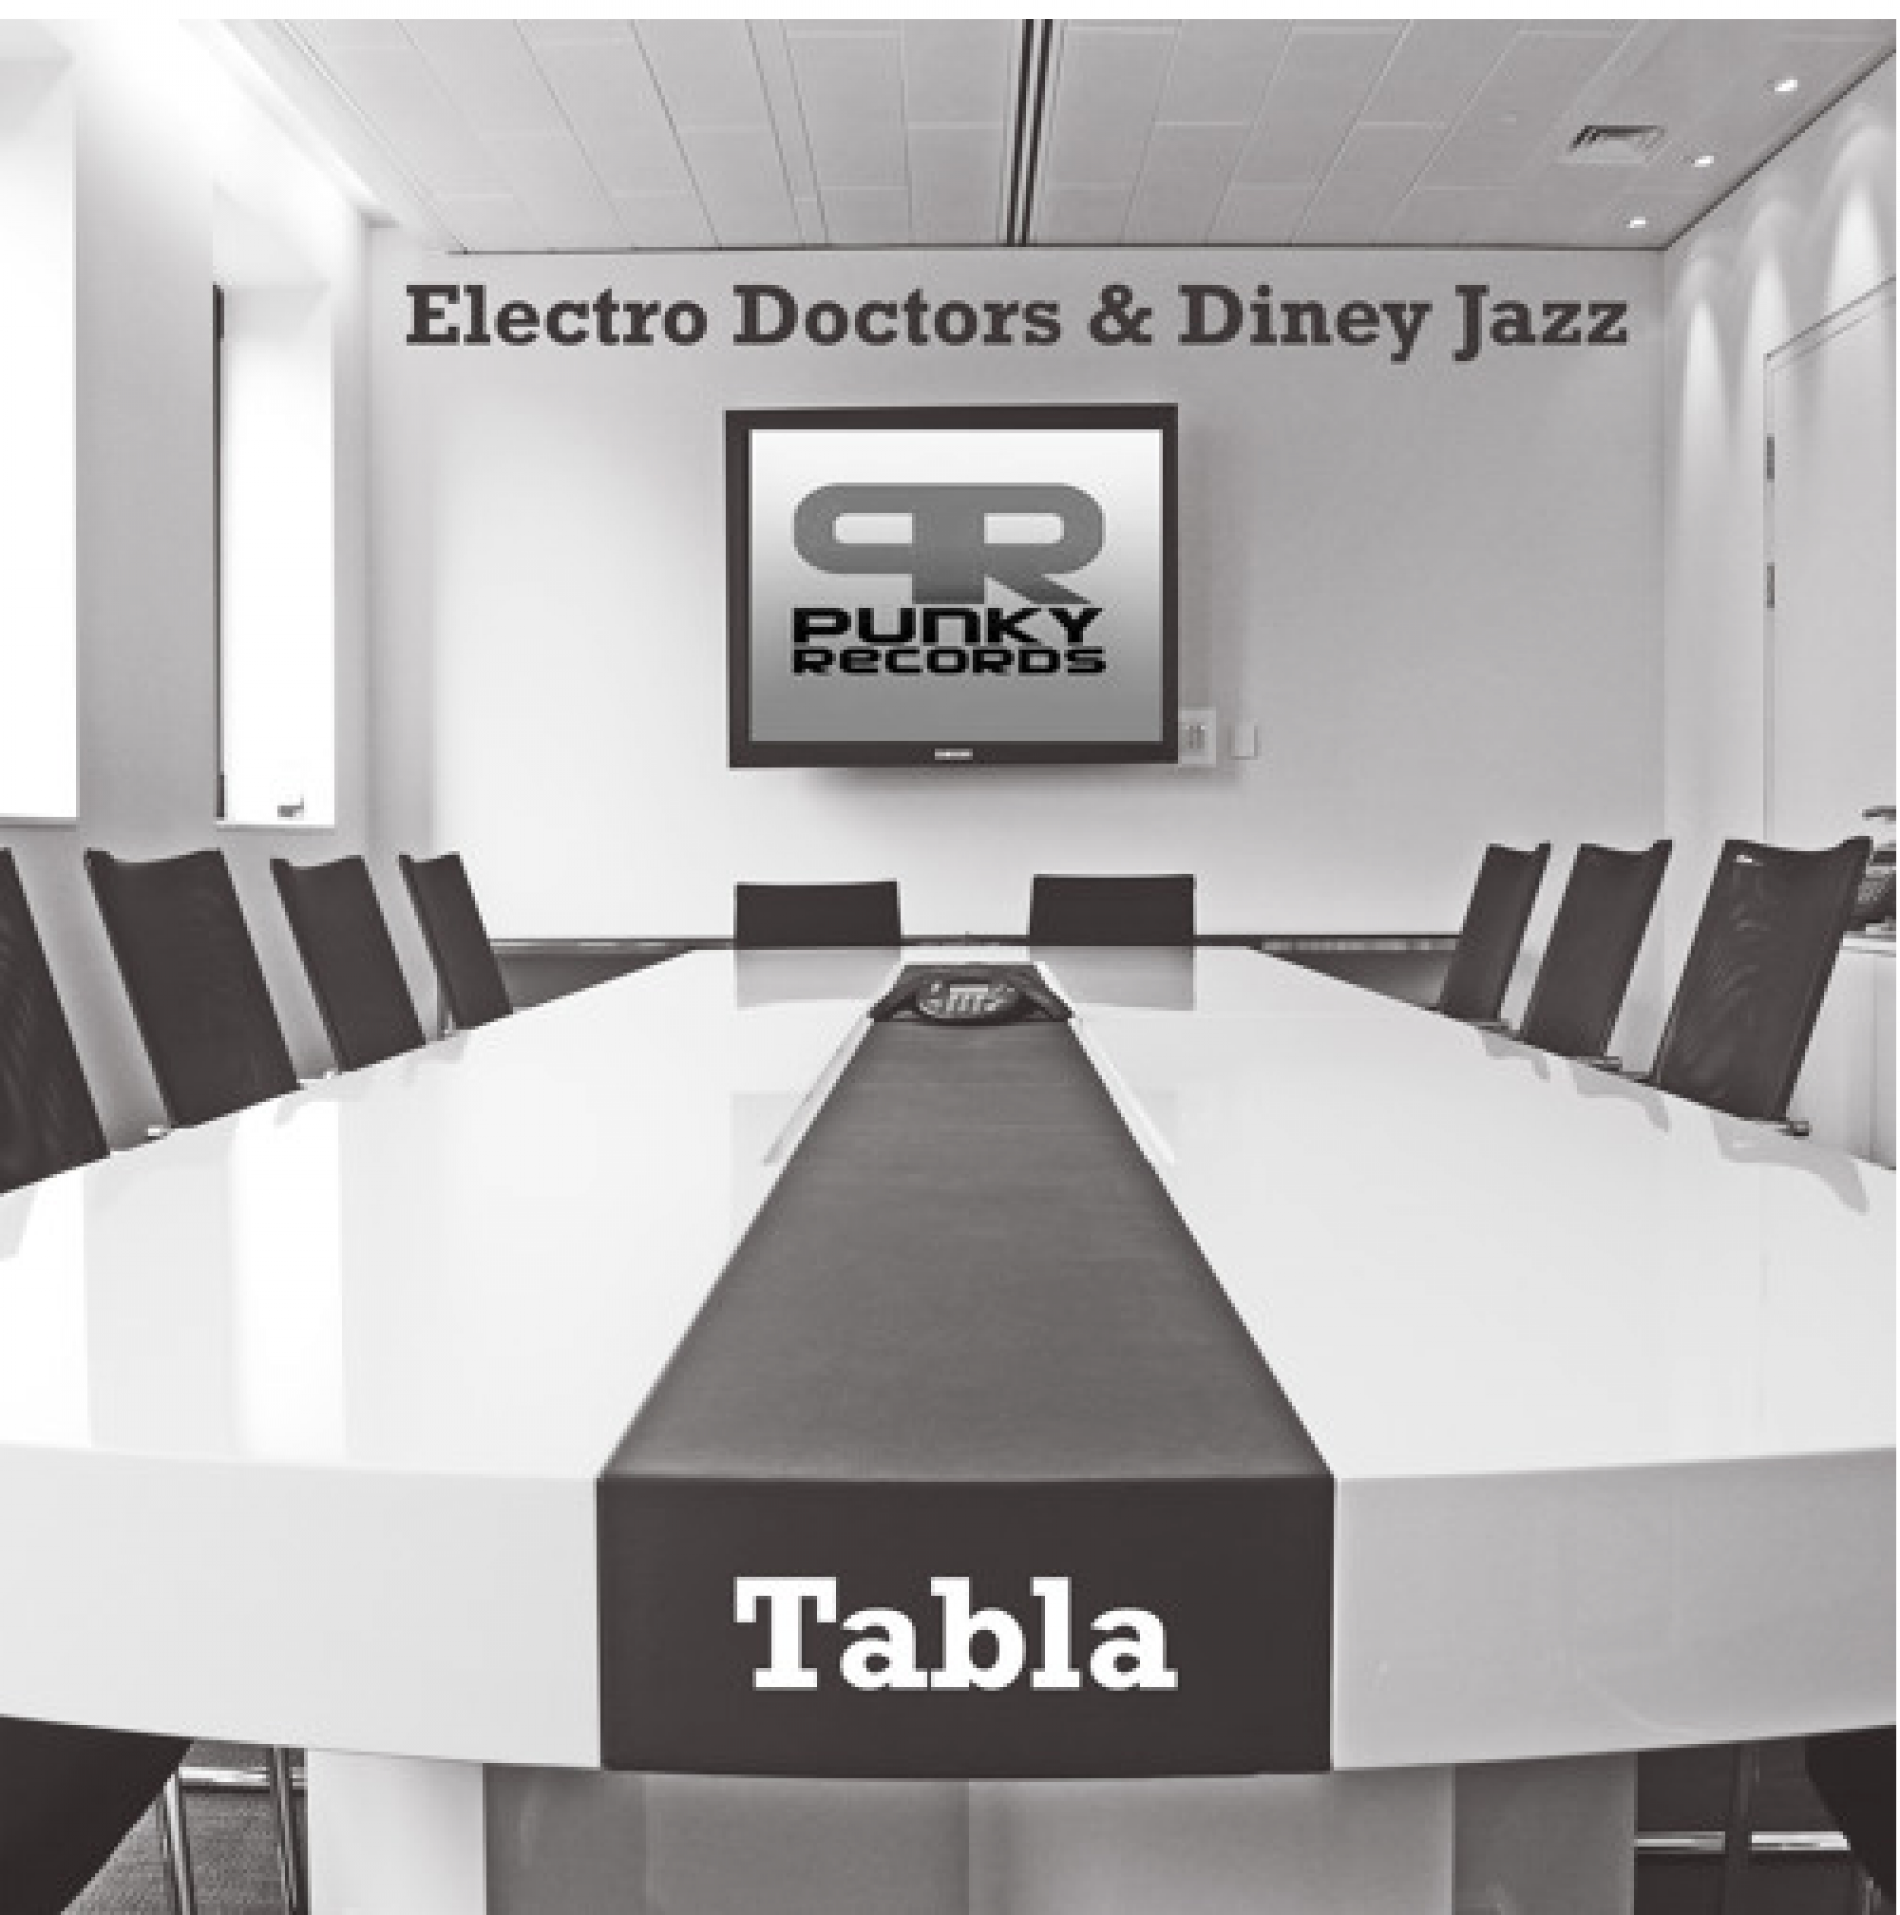 Electro Doctors & Diney Jazz – Tabla